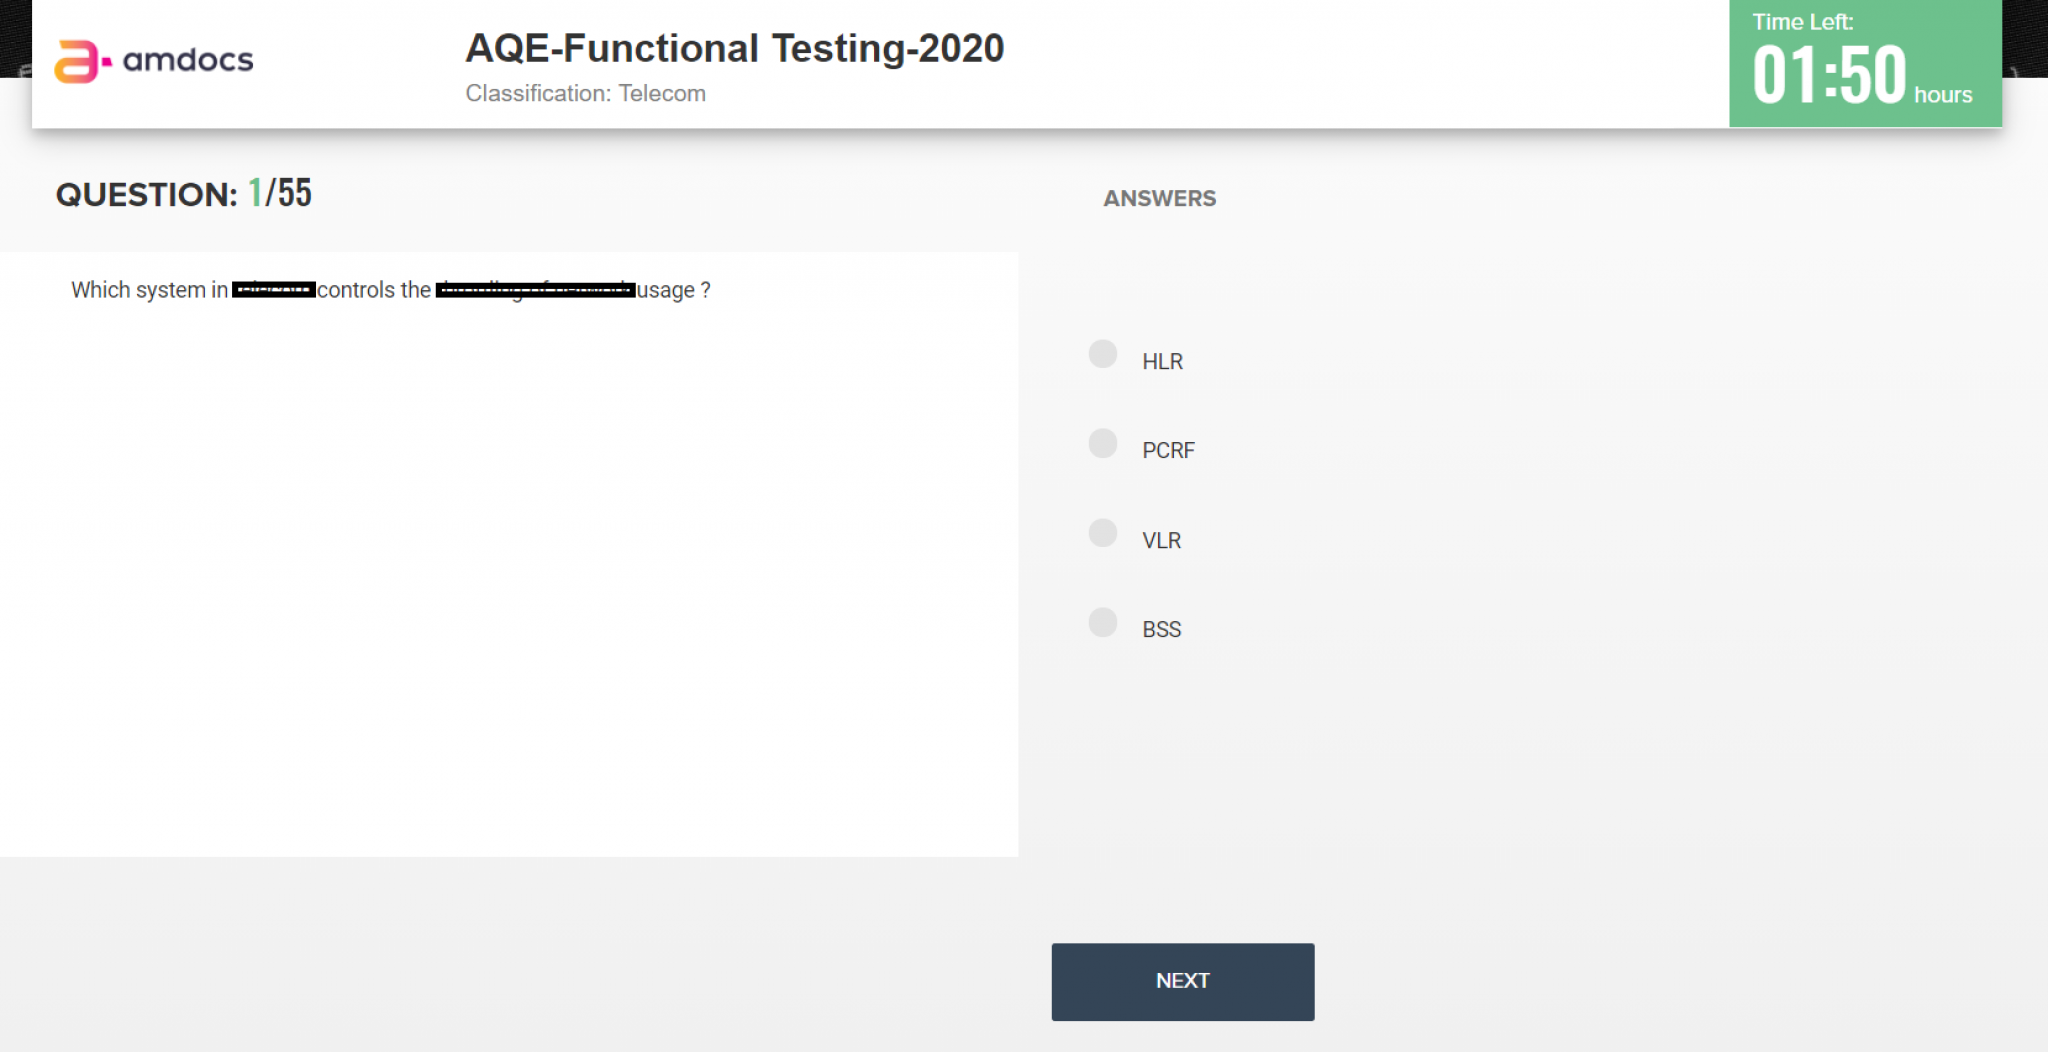 aqe-functional-testing-test-amdocs-lugo-test-mcqs-questions-answers